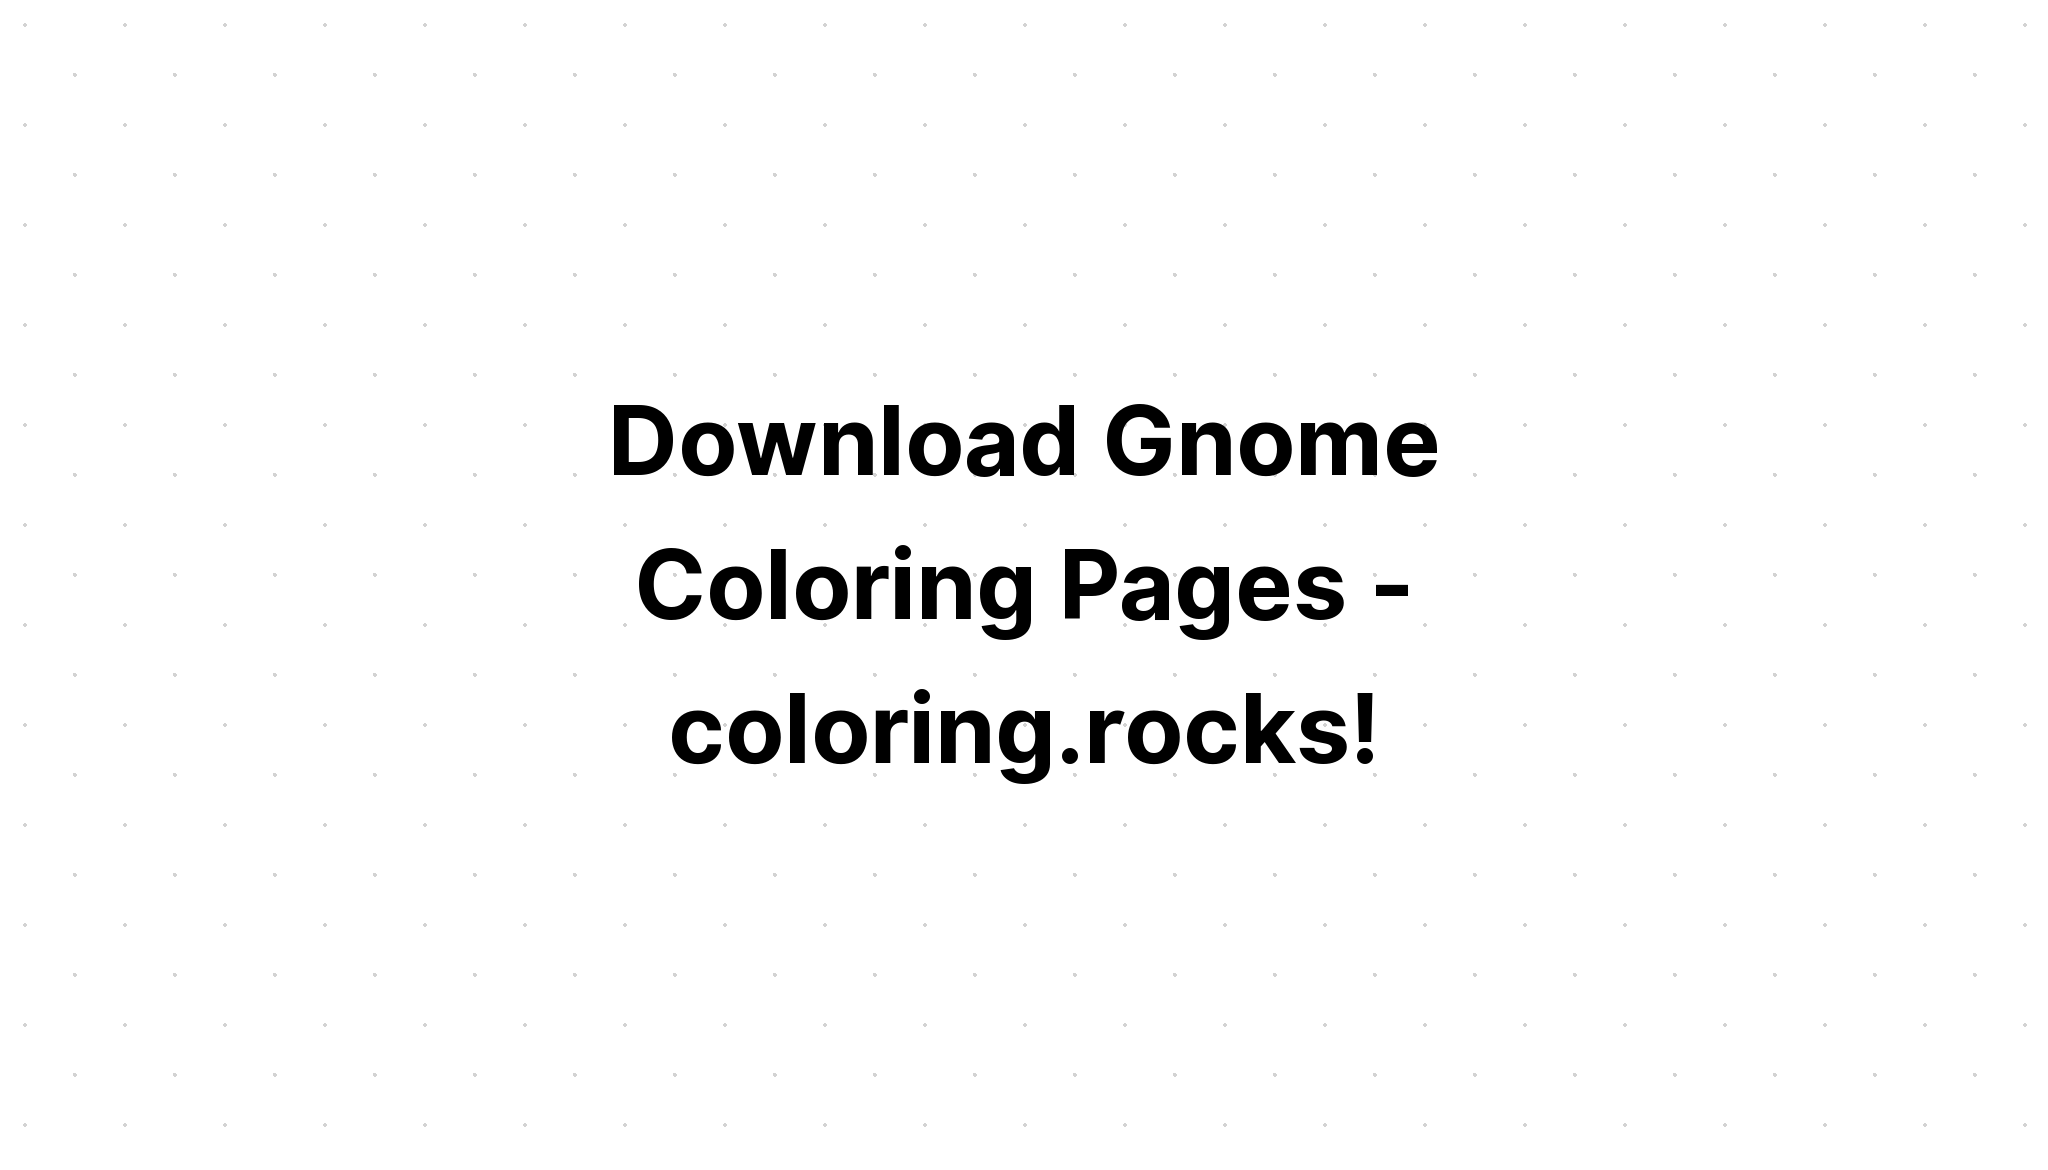 Download Garden Gnome Coloring Set SVG File